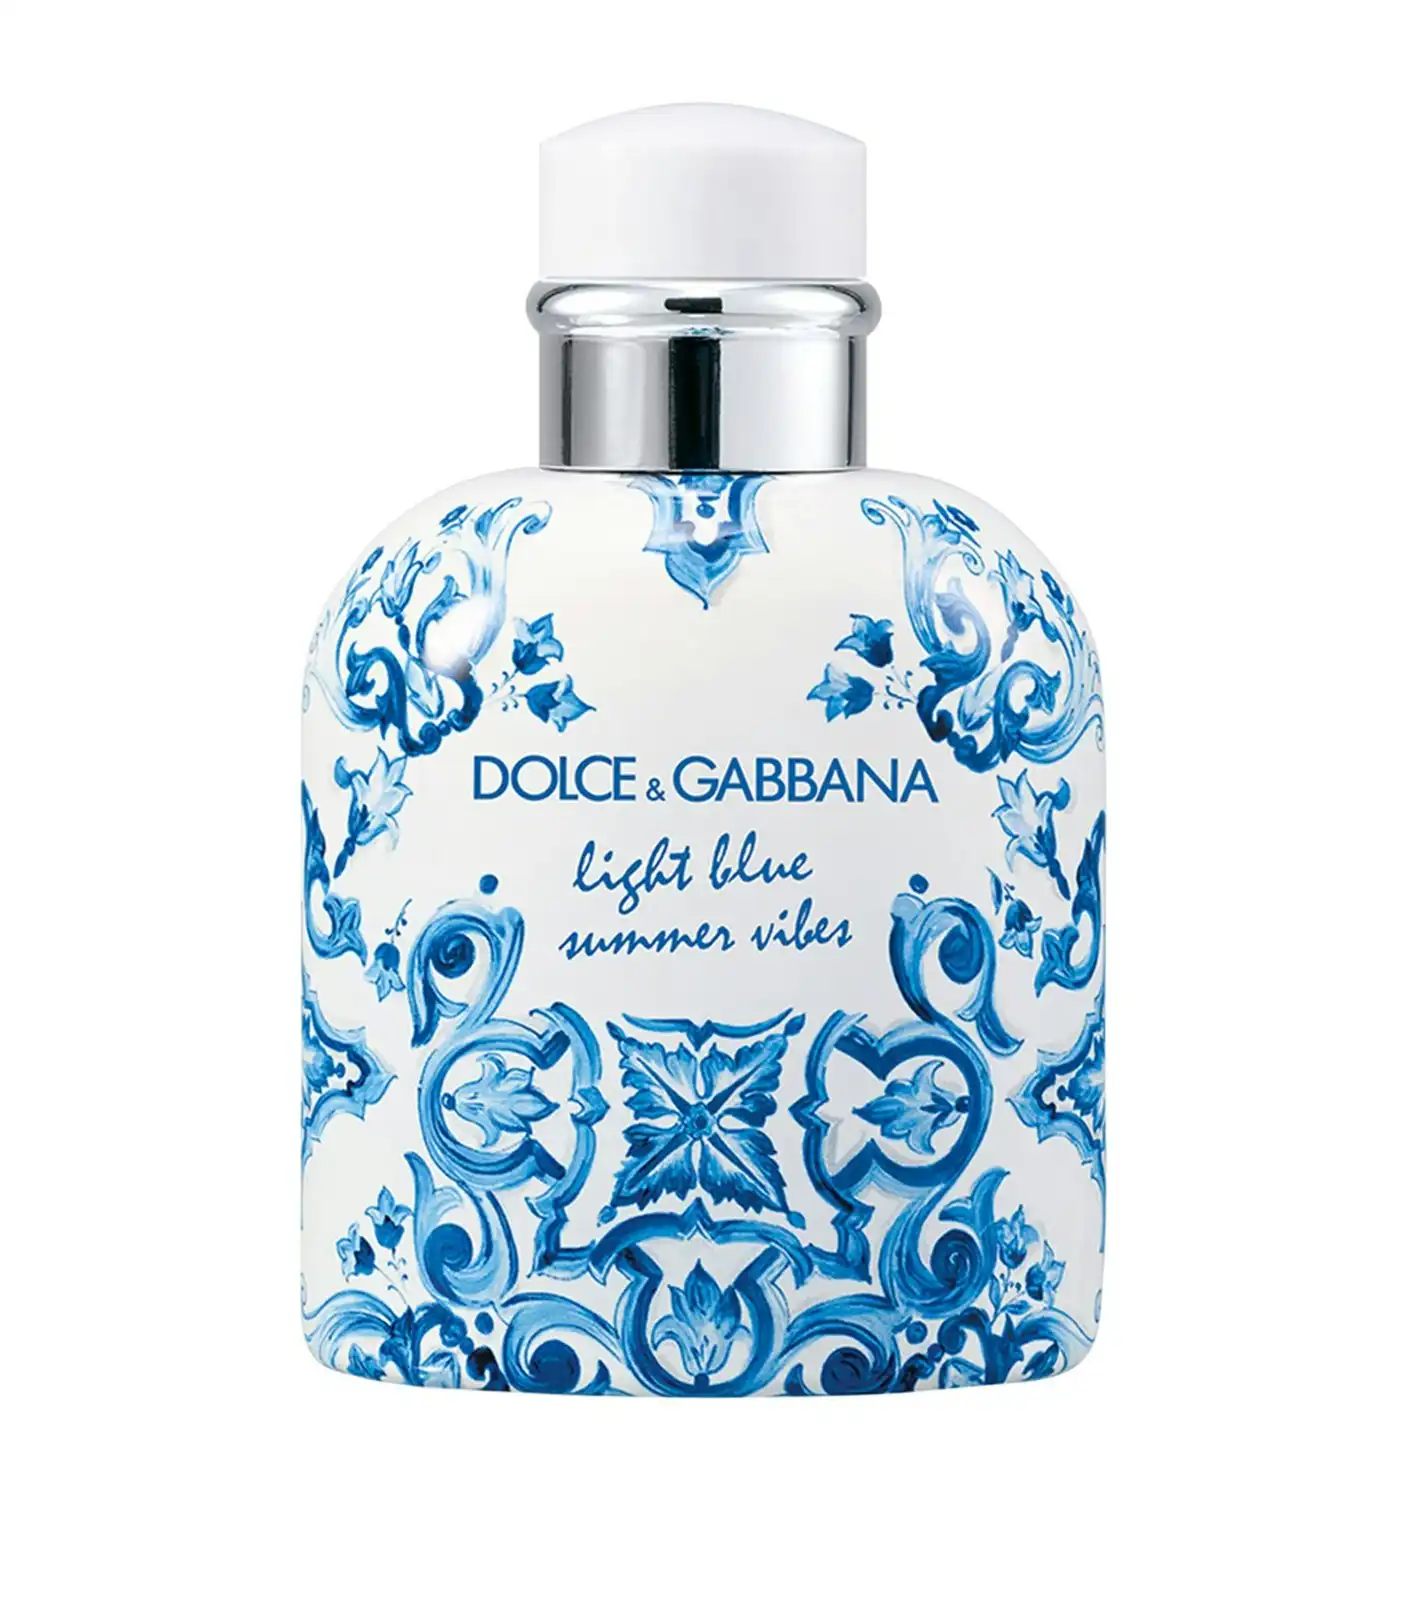 Dolce & Gabbana Light Blue Summer Vibes Pour Homme EDT 125ml